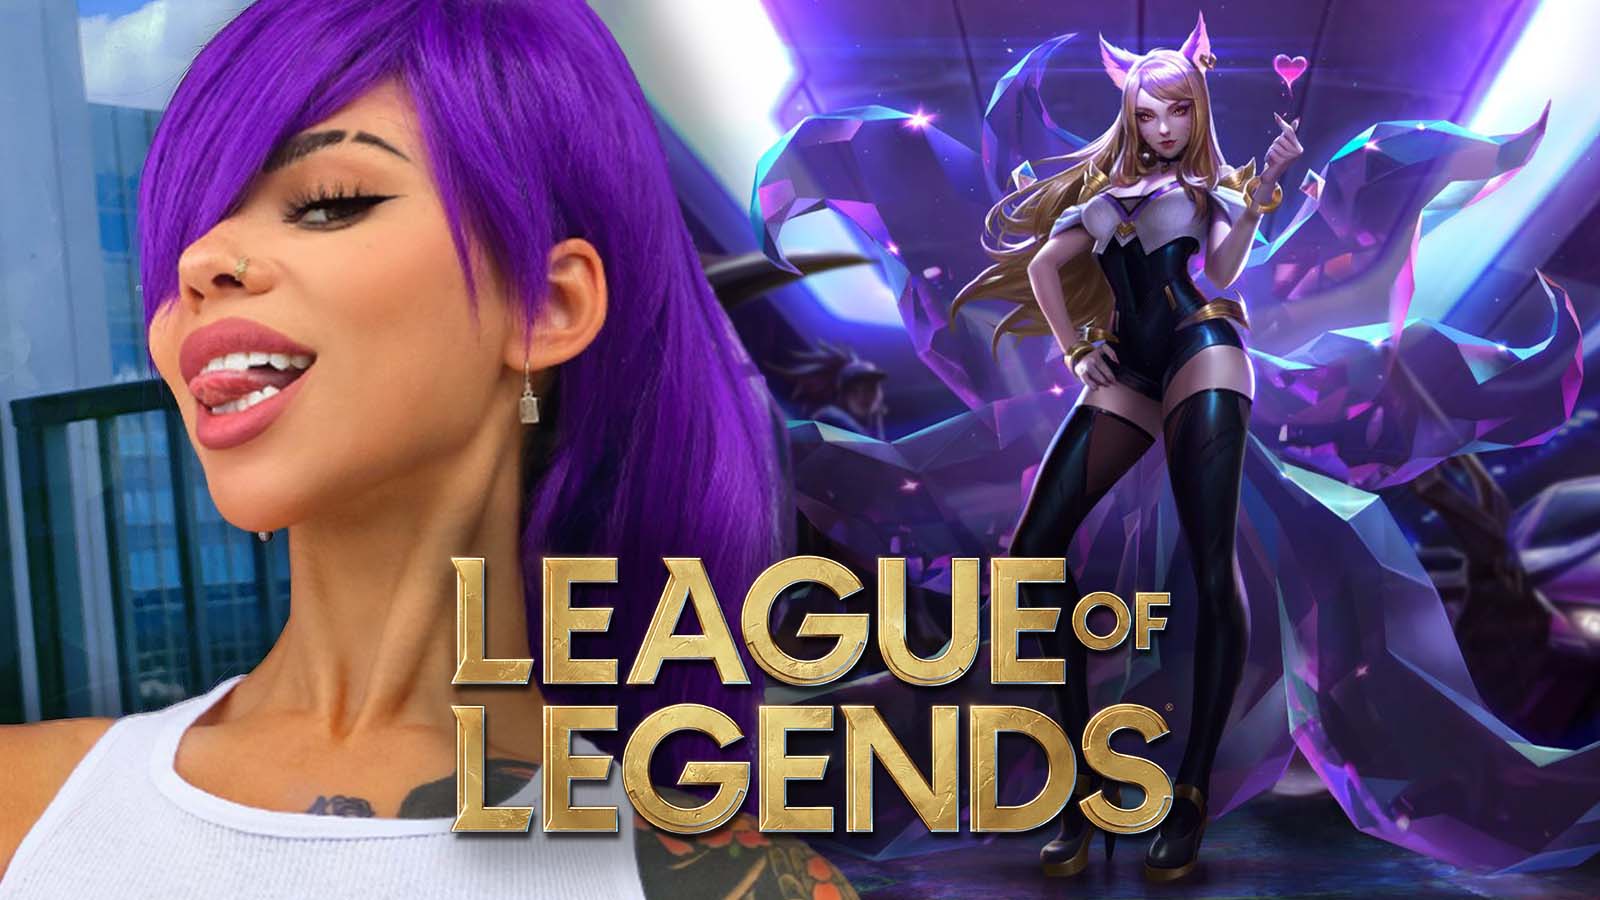 League of Legends cosplayer goes viral on TikTok as dazzling K/DA Ahri